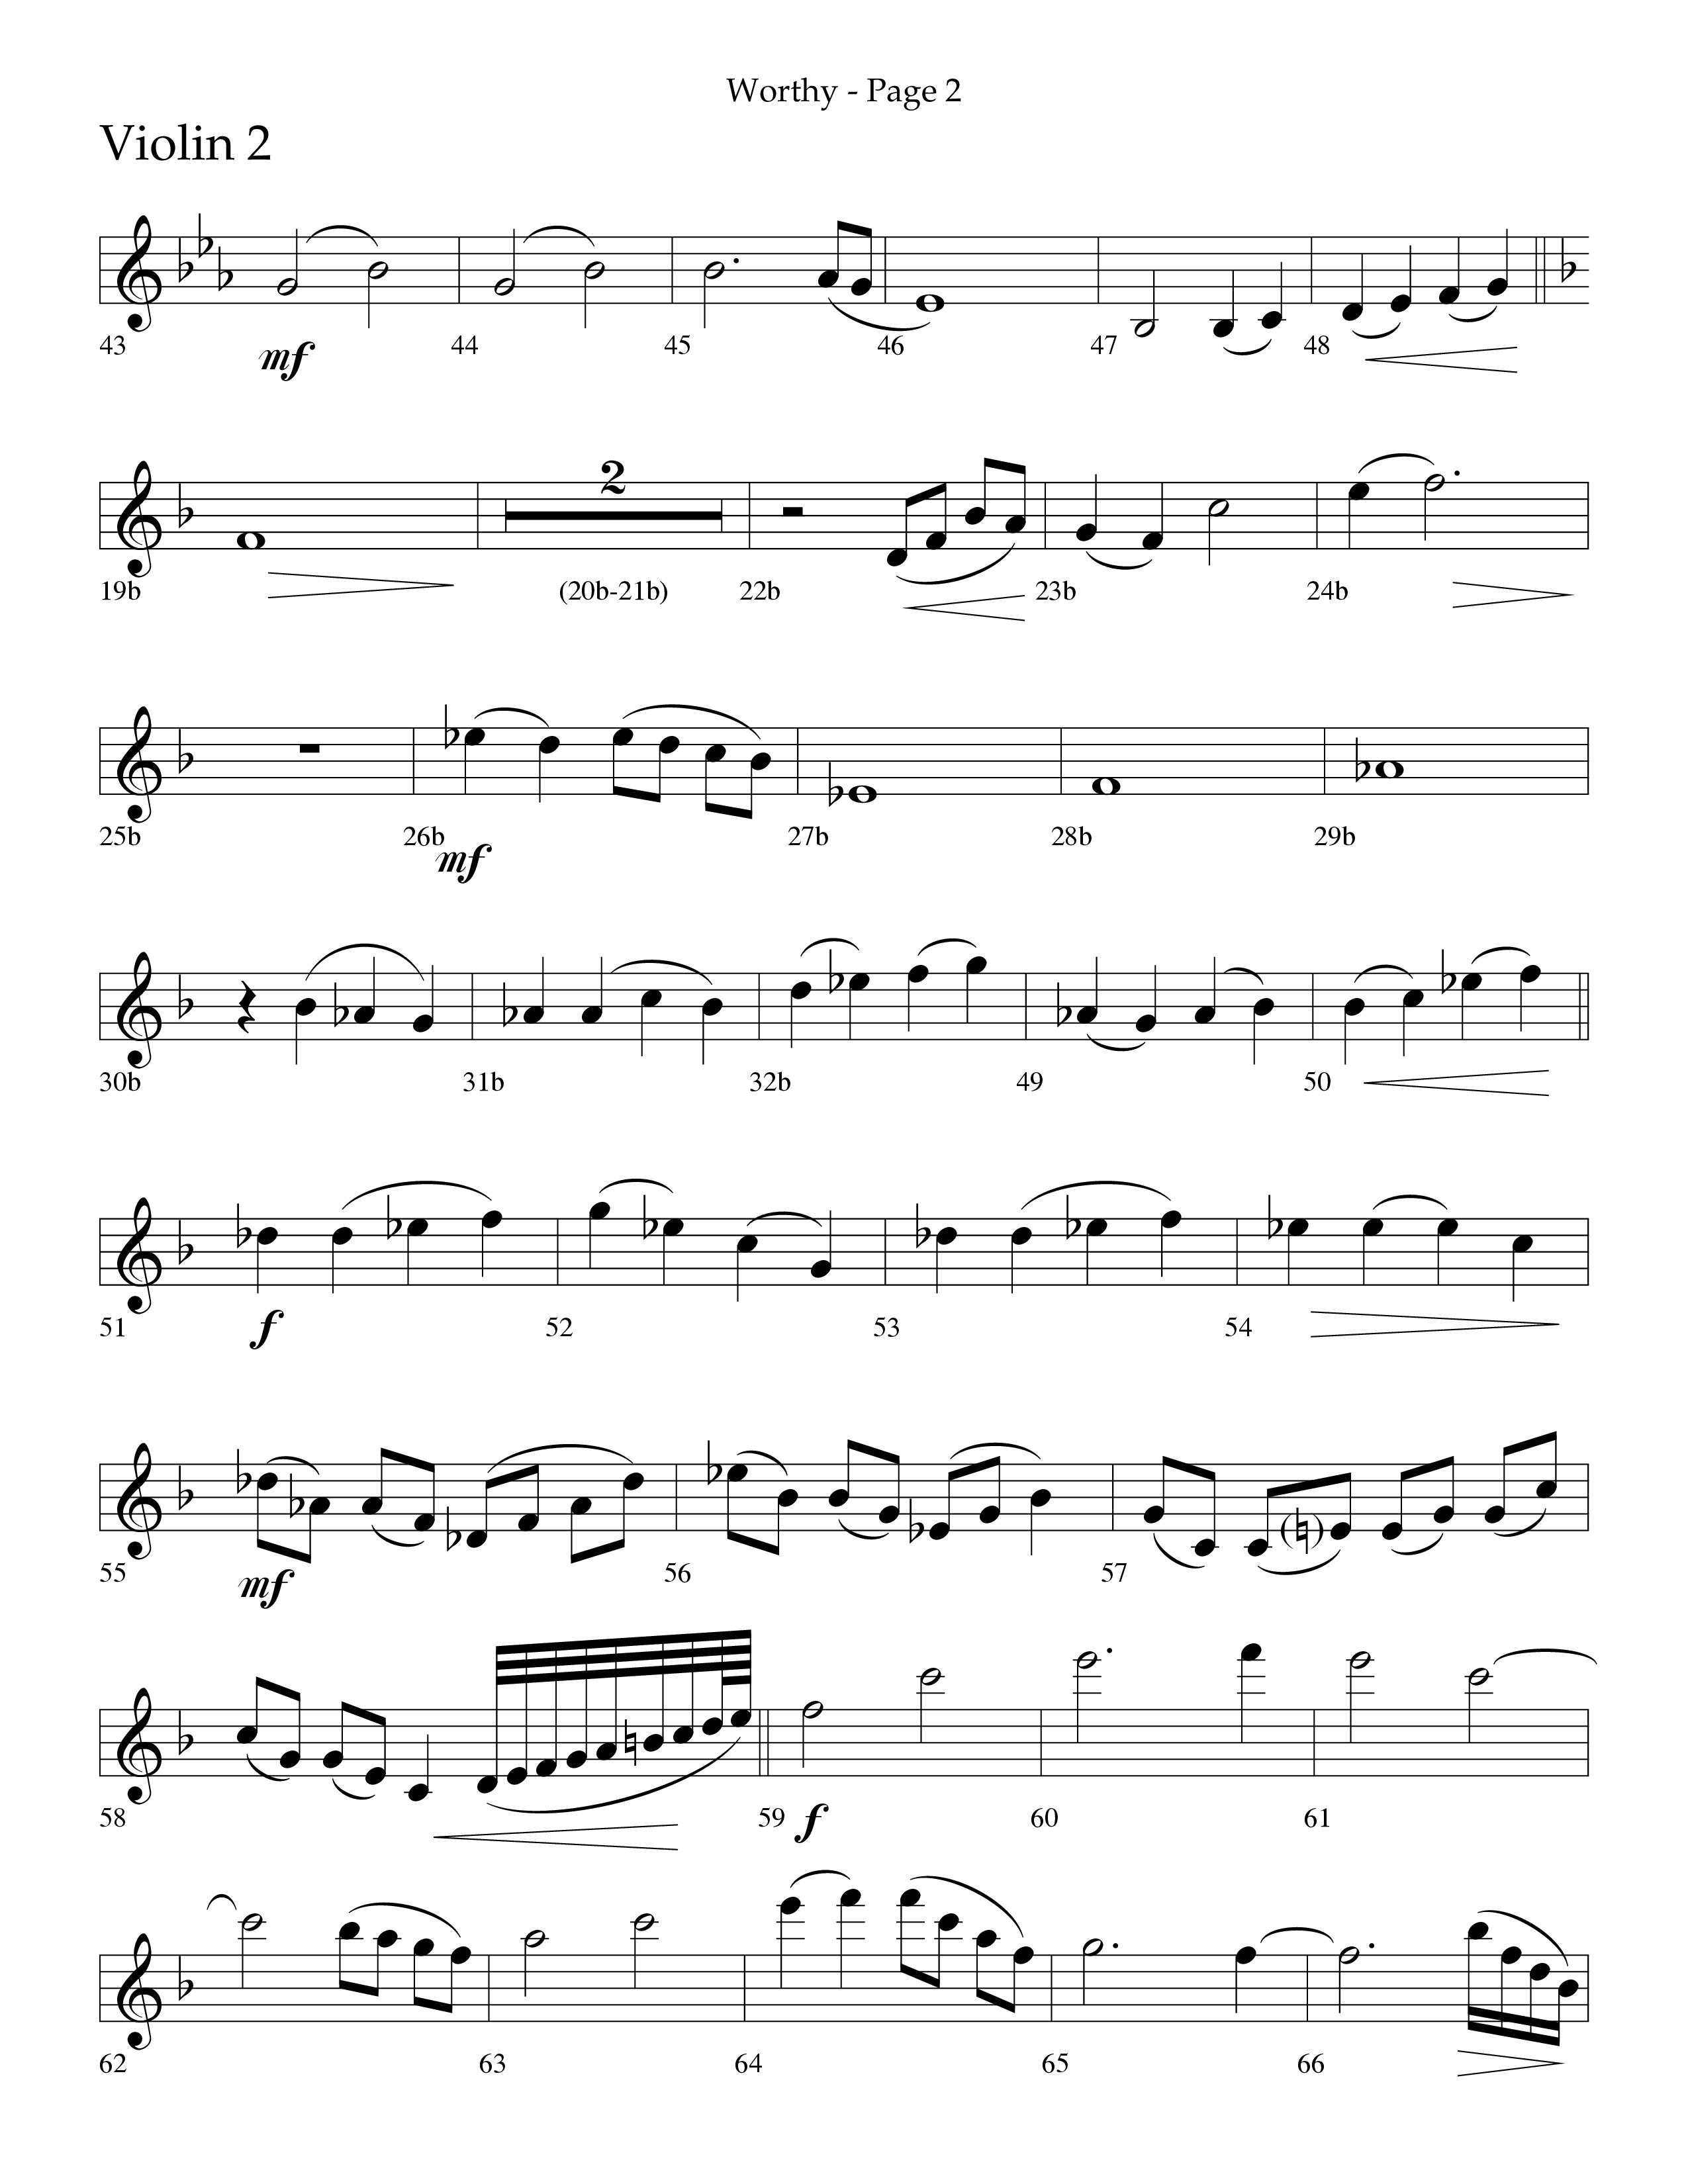 Worthy (Choral Anthem SATB) Violin 2 (Lifeway Choral / Arr. Dennis Allen / Orch. David Davidson)